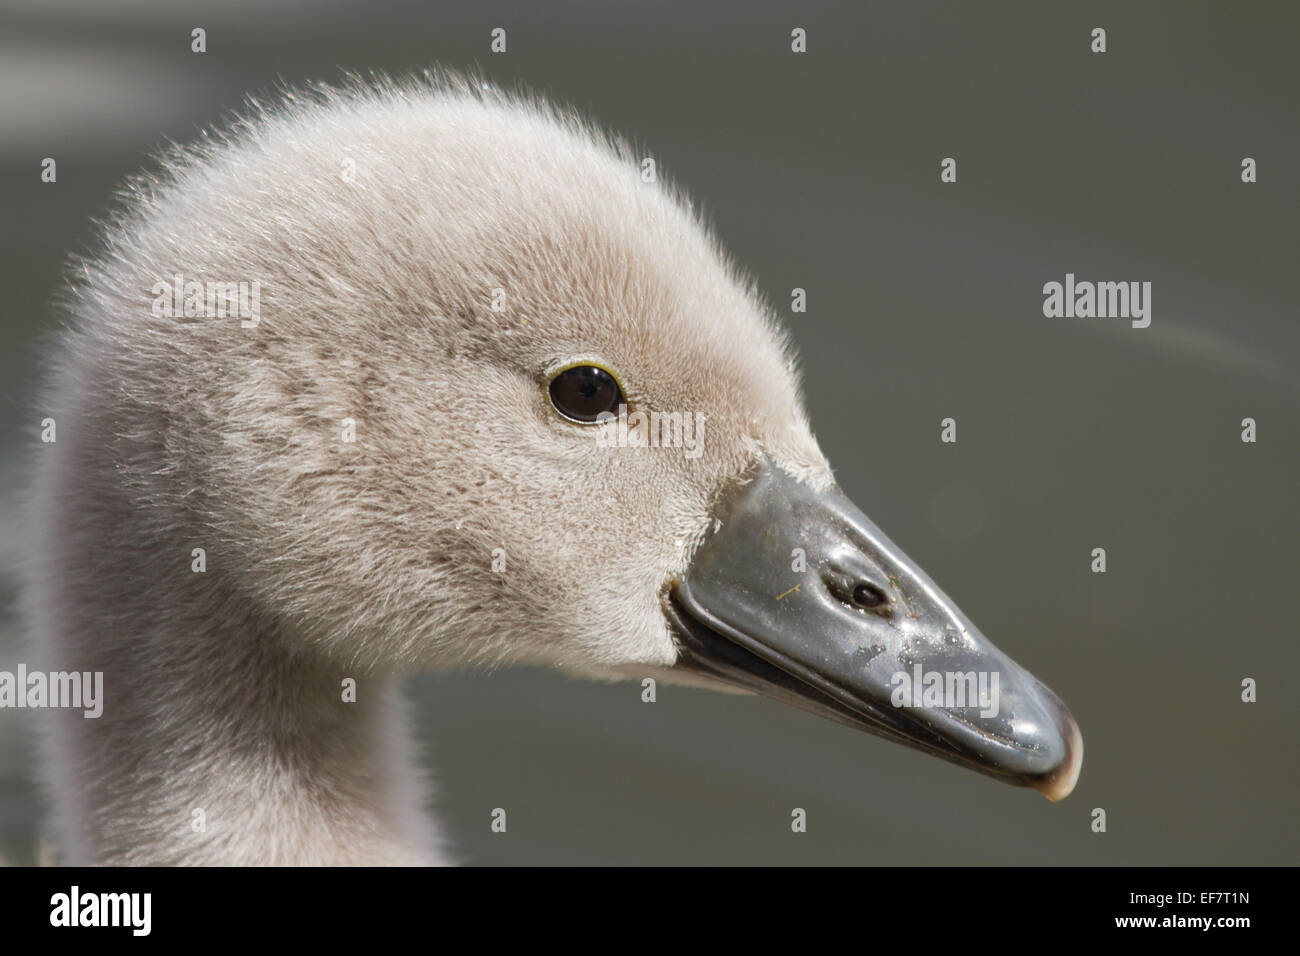 Mute swan cygnet close up portrait. Stock Photo